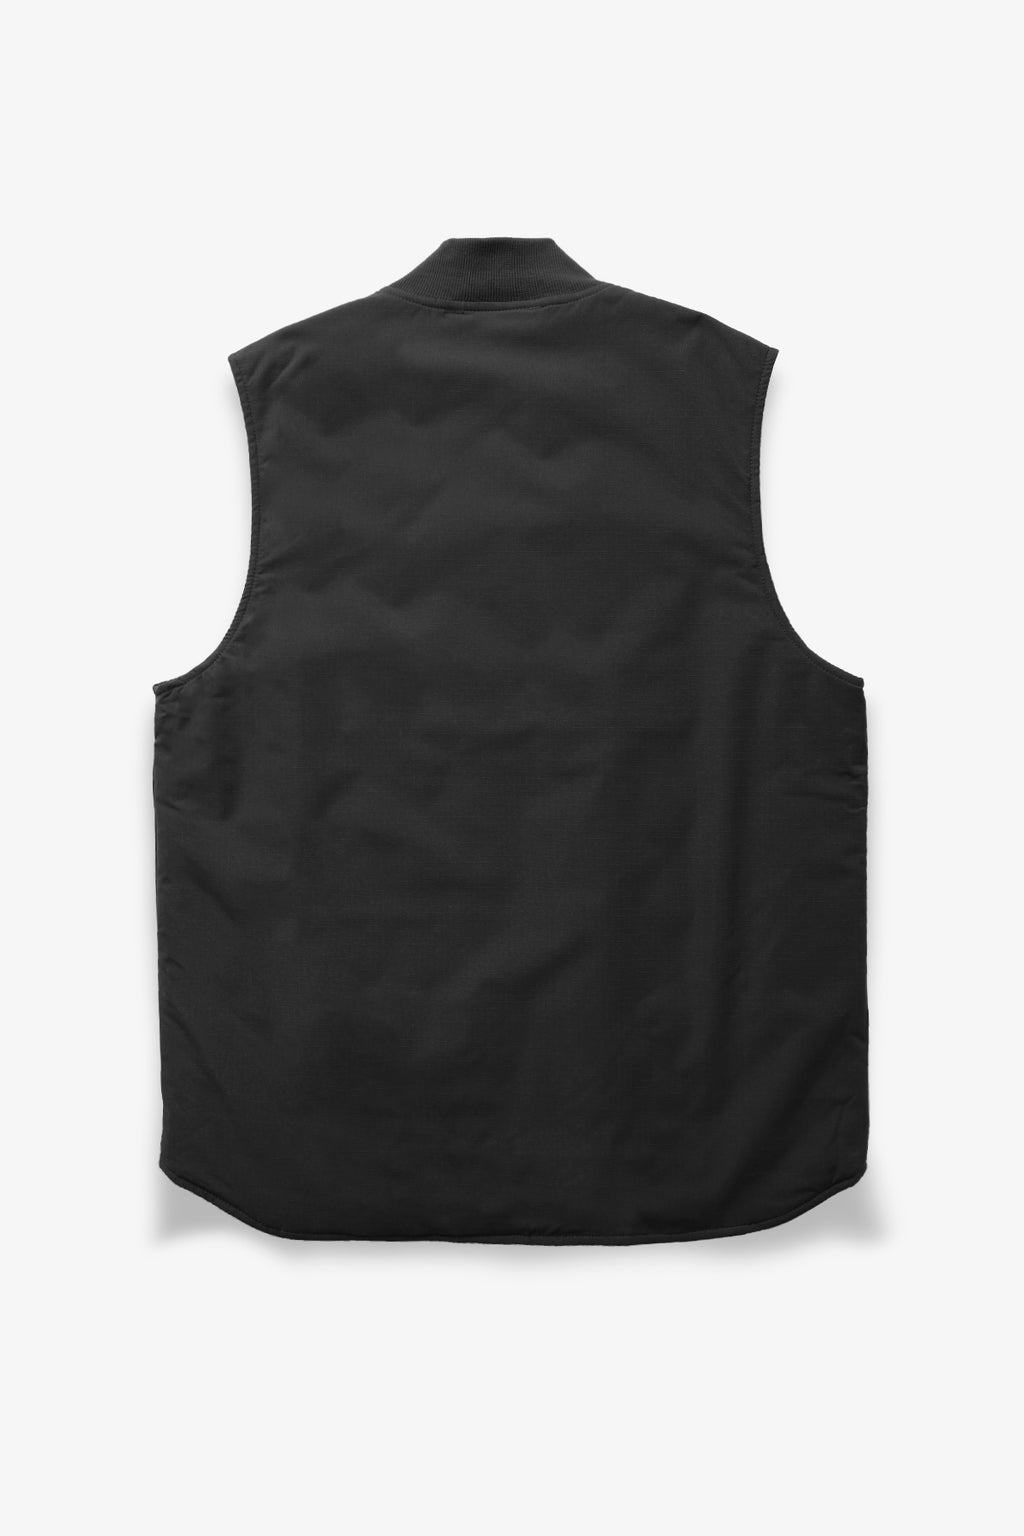 Pro Club - Work Vest - Black